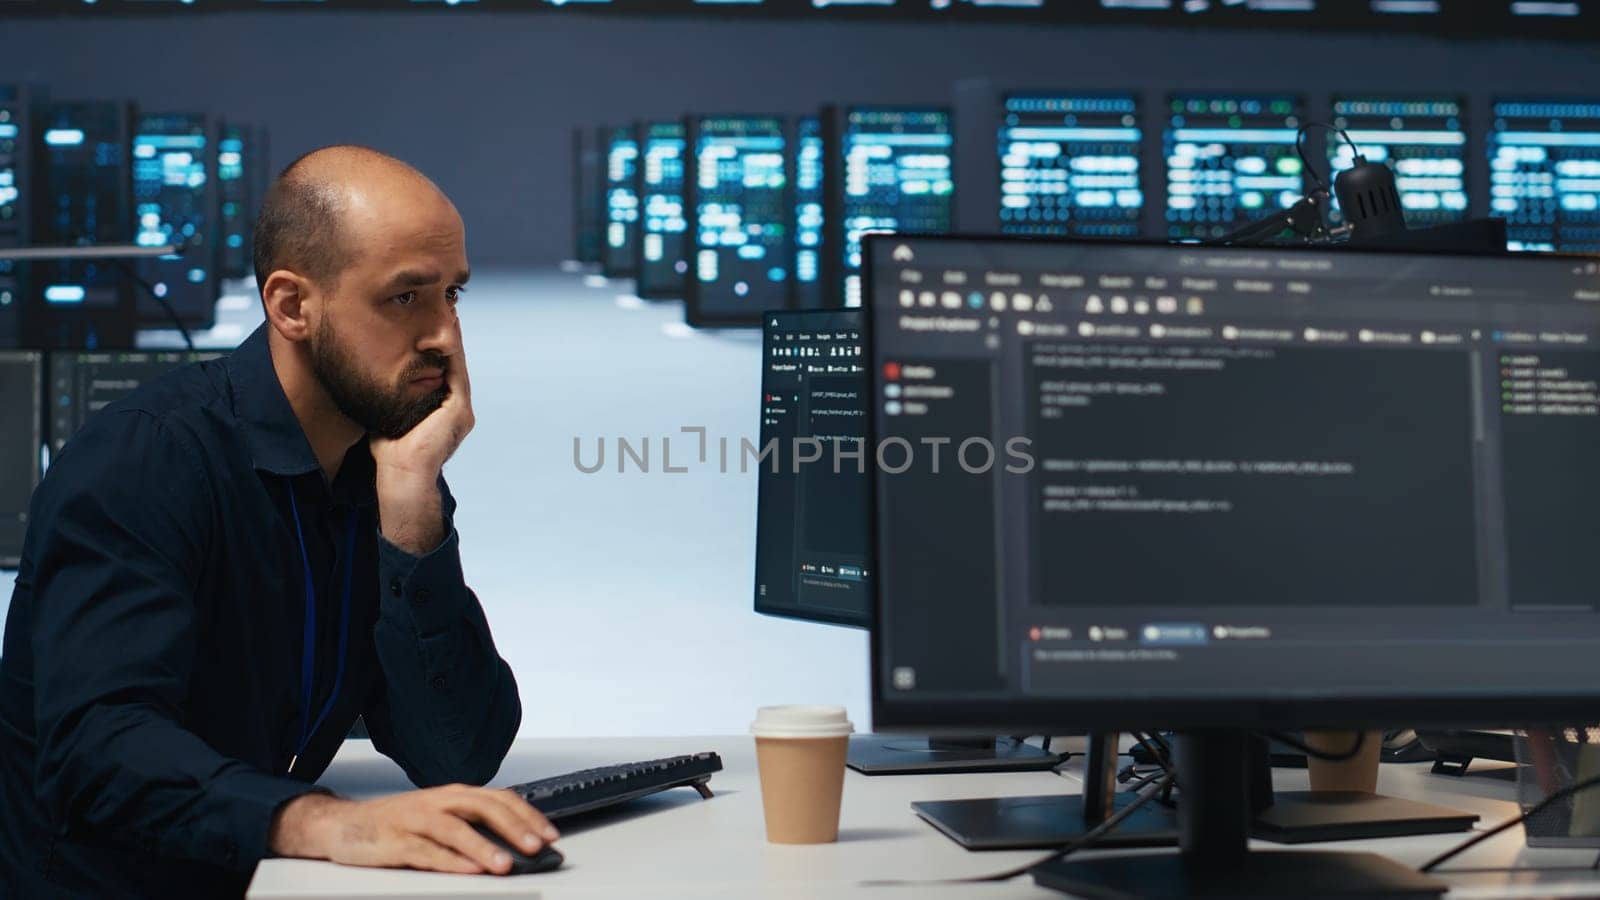 Technician using PC in high tech server hub facility to safeguard data by DCStudio